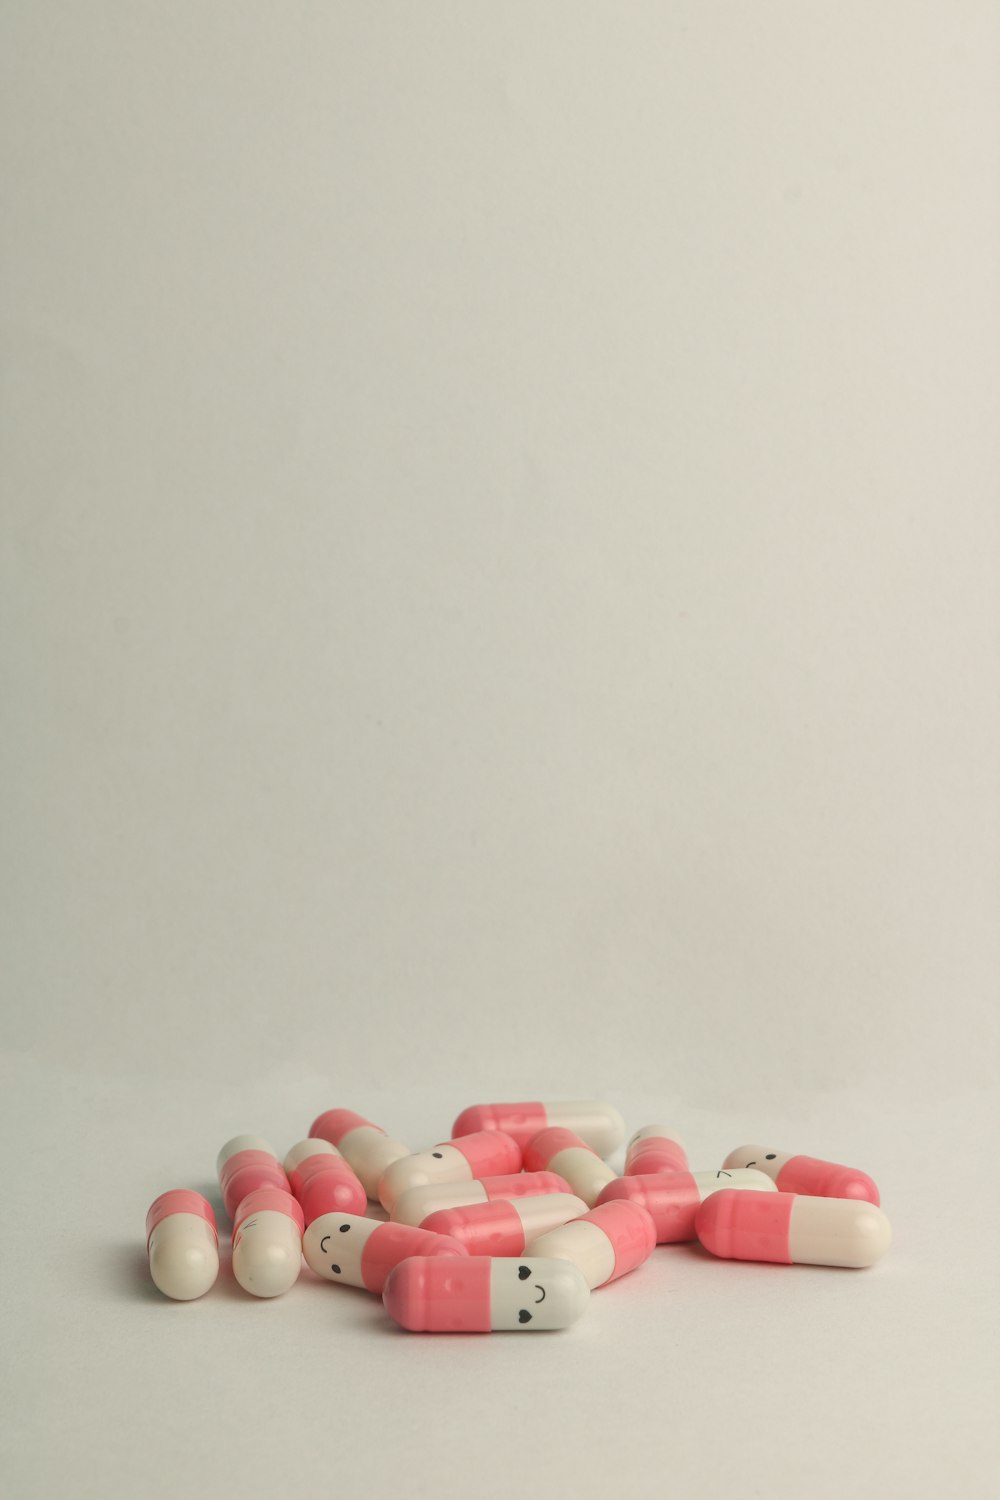 pillola di farmaco rosa e bianca